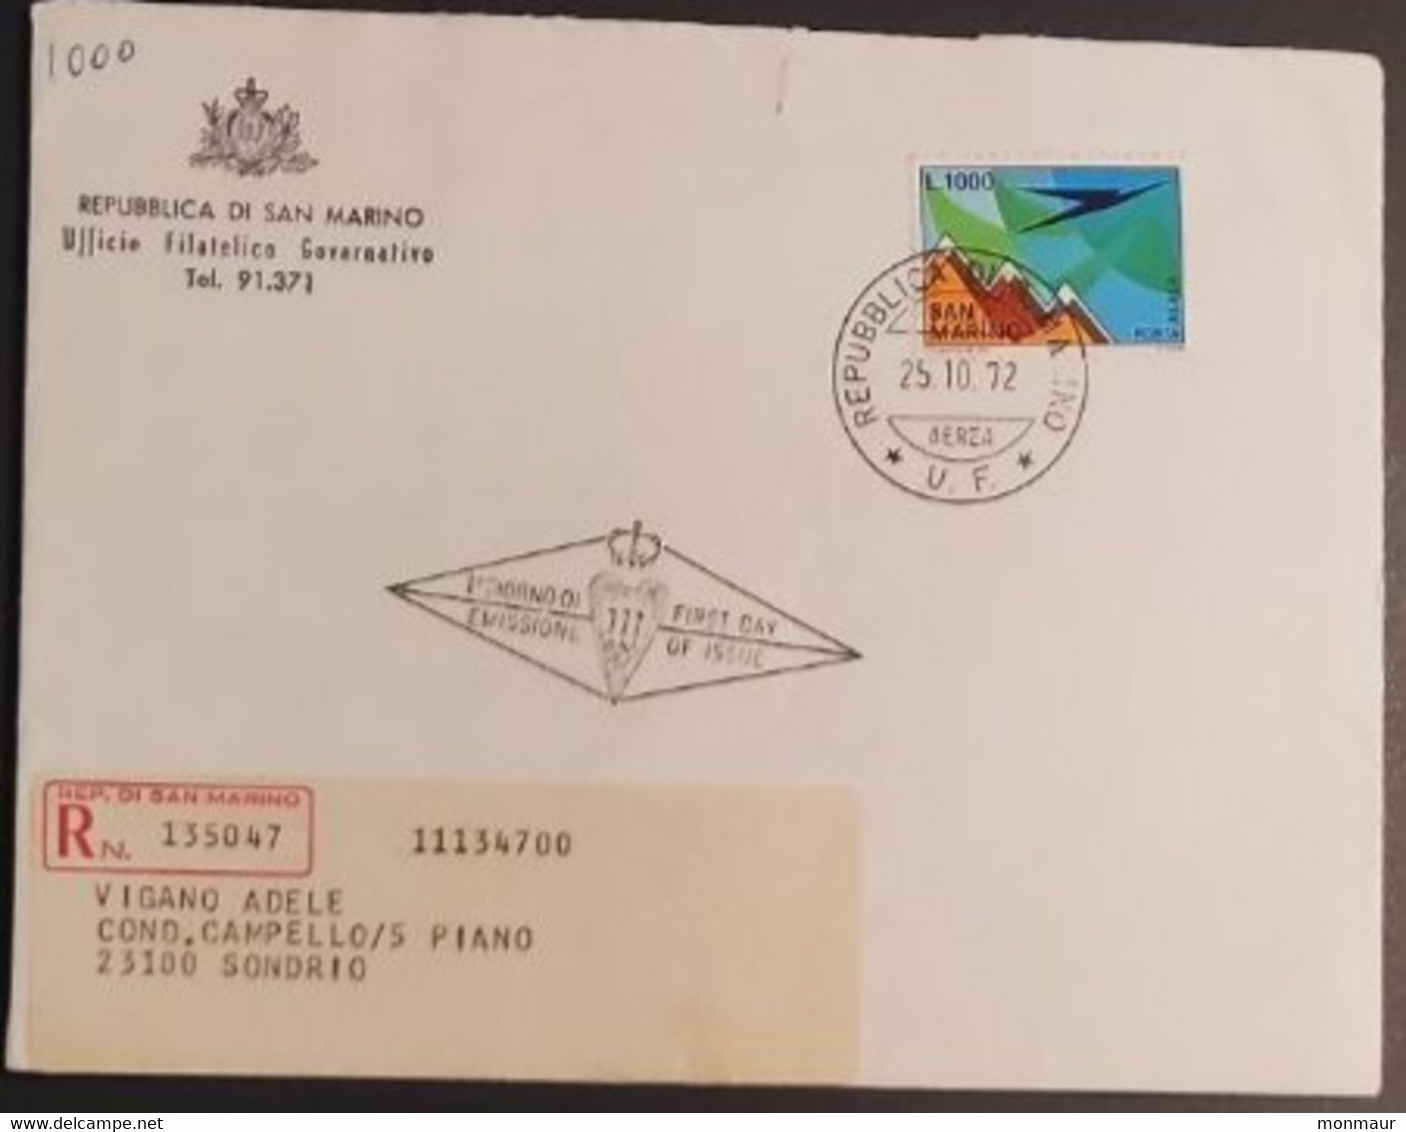 SAN MARINO 1972 RACCOMANDATA FDC POSTA AEREA - Used Stamps